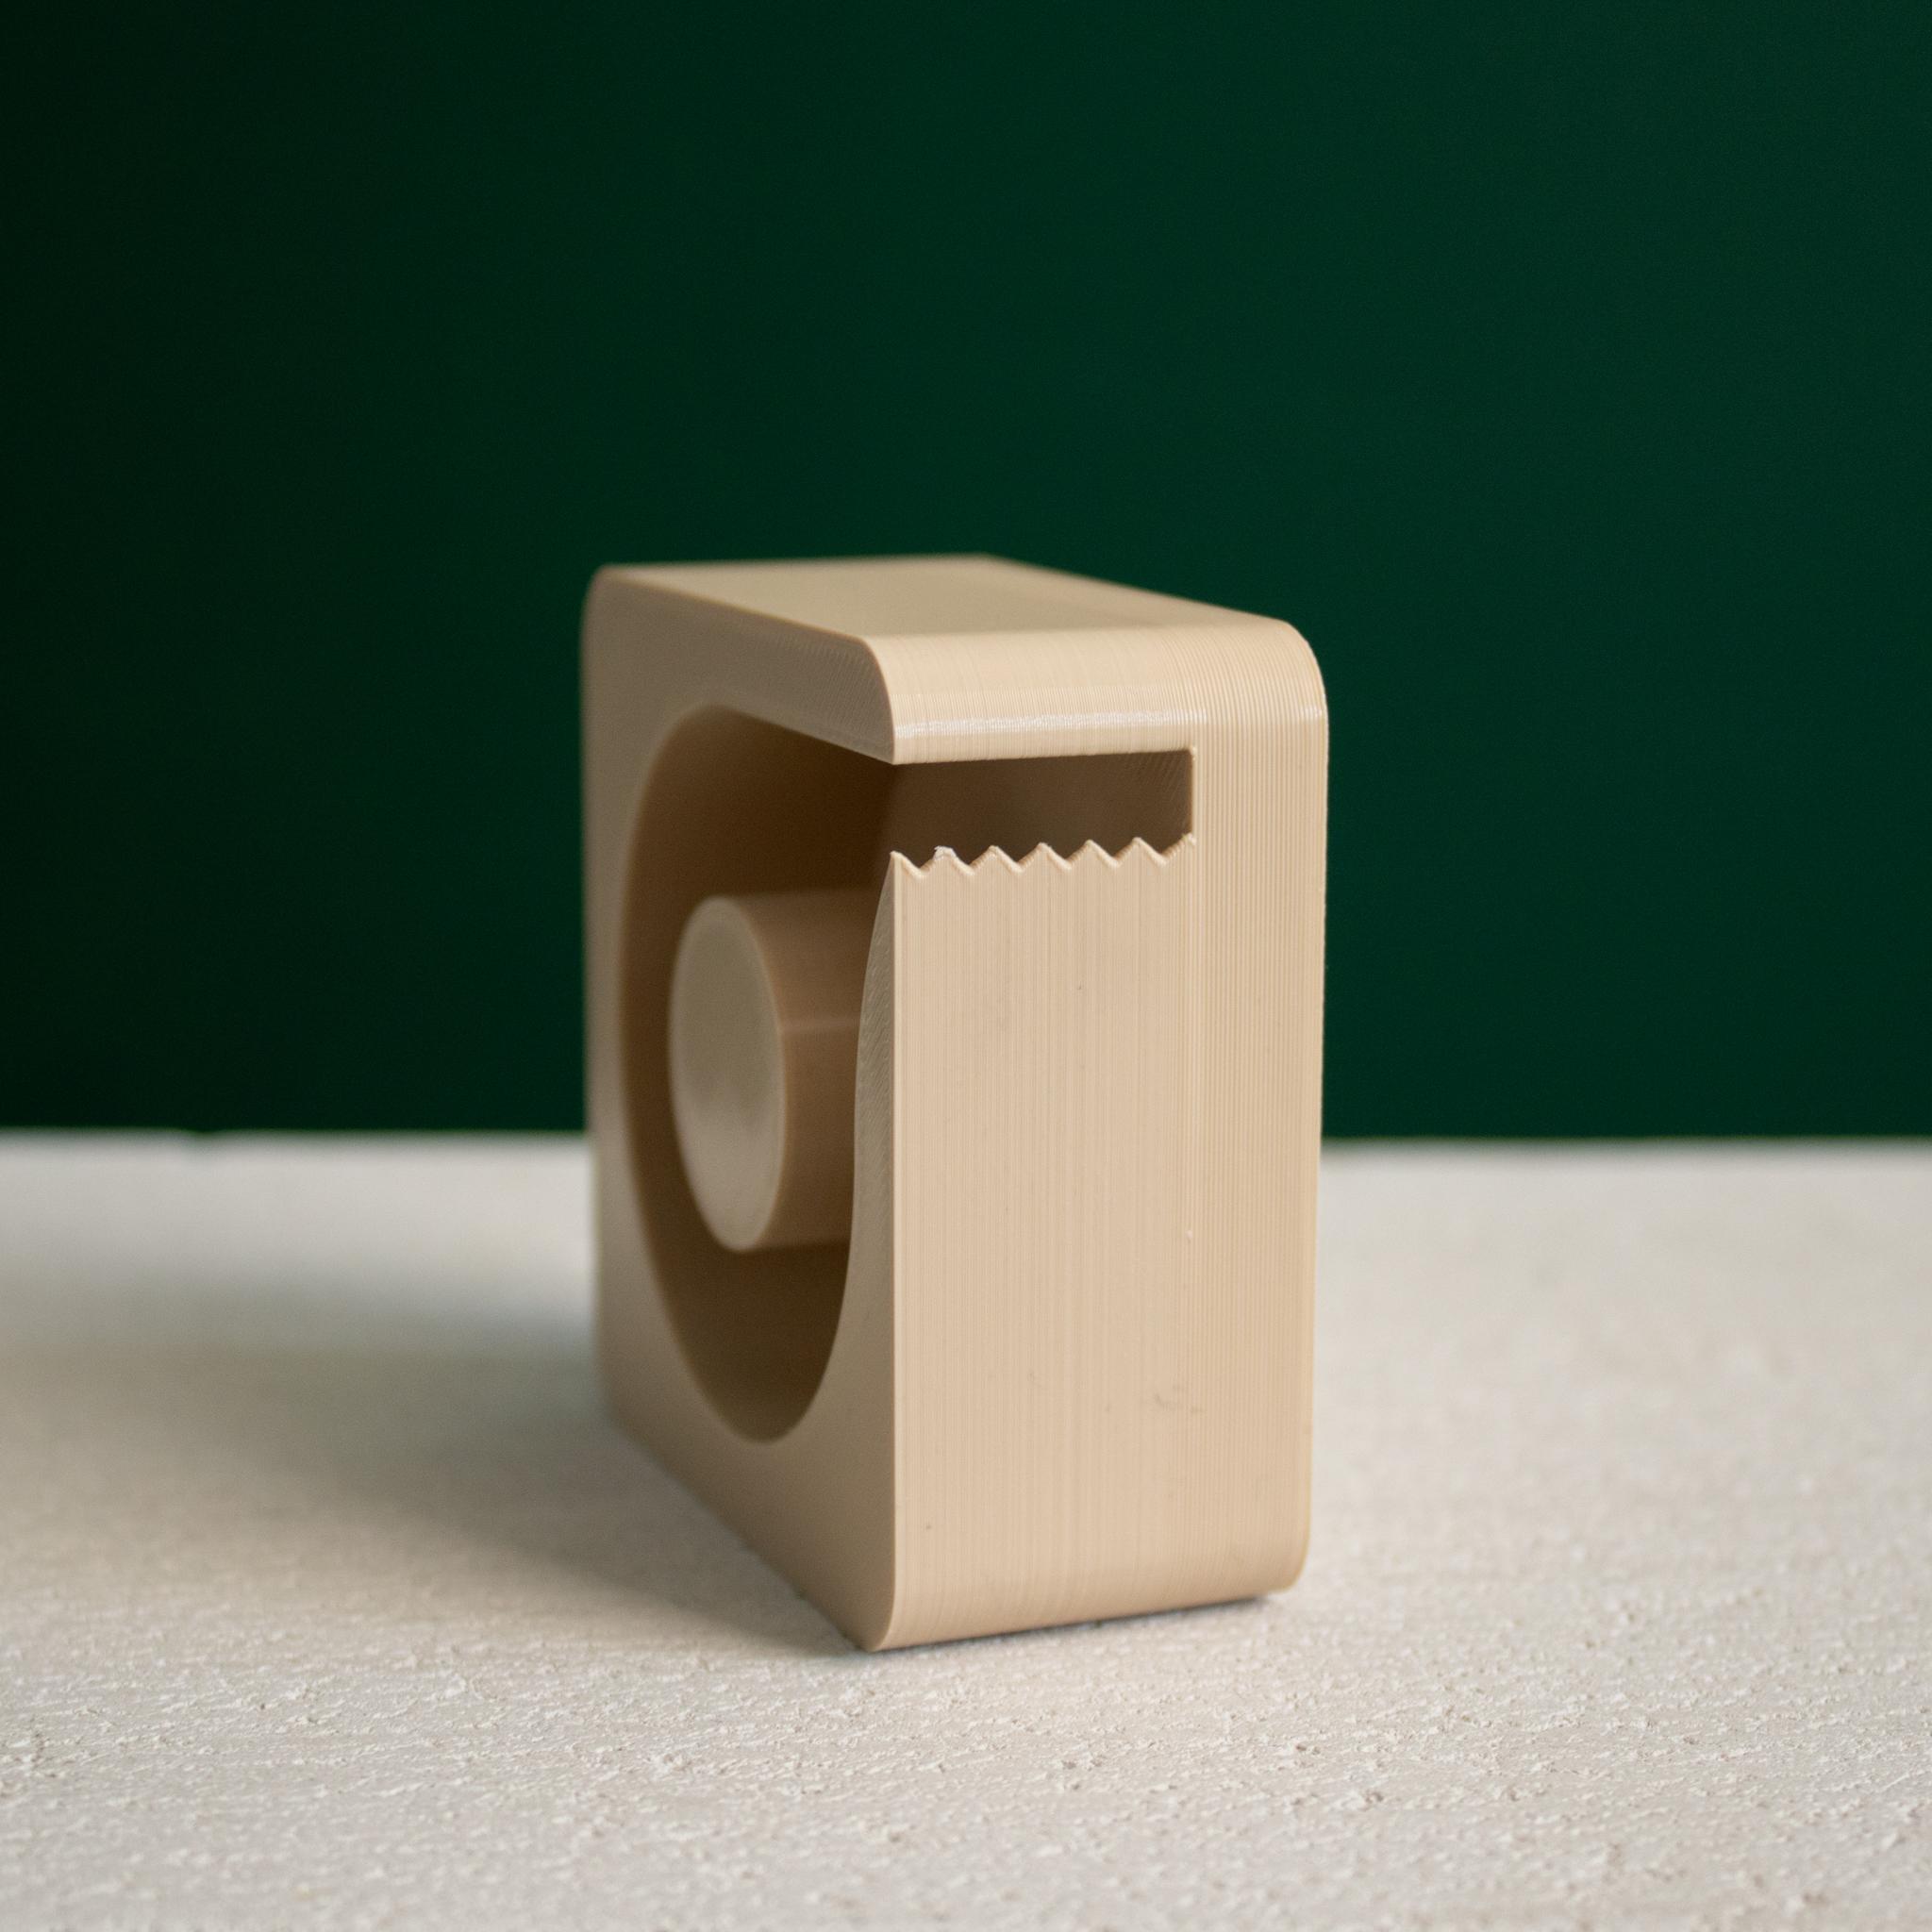  Minimalist Tape Dispenser (desk organizer)  3d model